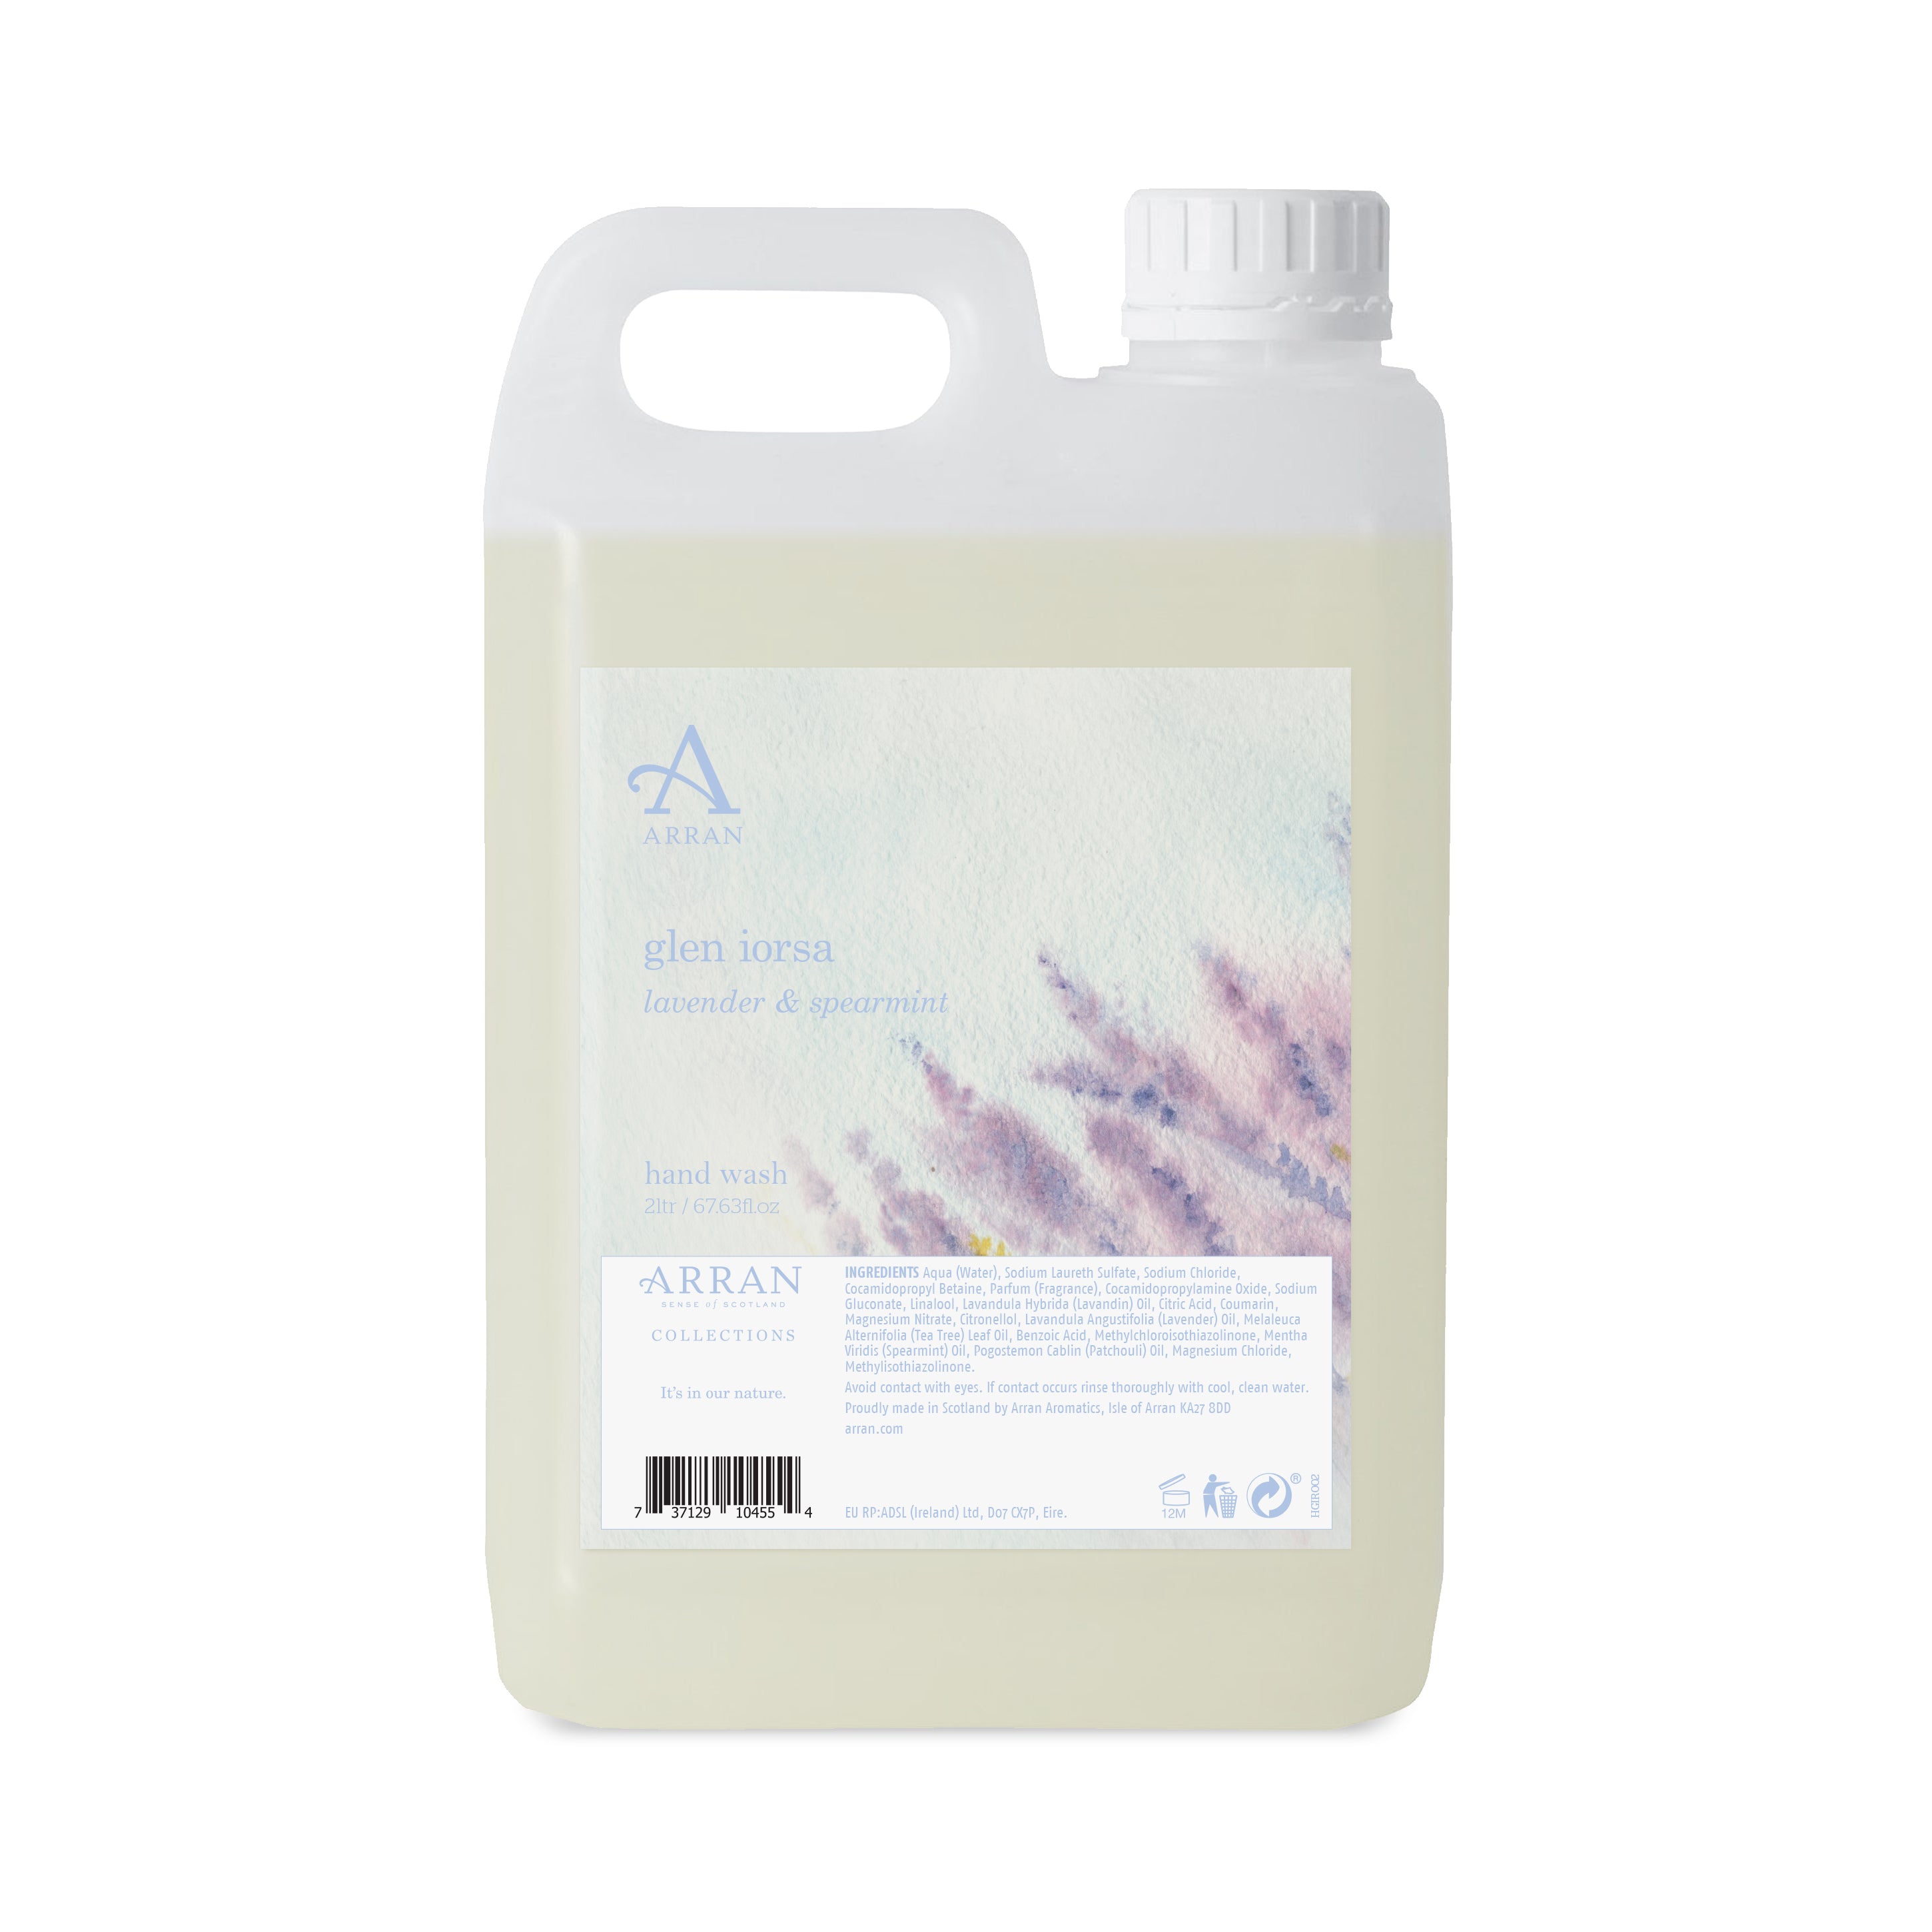 An image of ARRAN 2L Glen Iorsa Liquid Hand Wash Refill | Made in Scotland | Lavender & Spea...